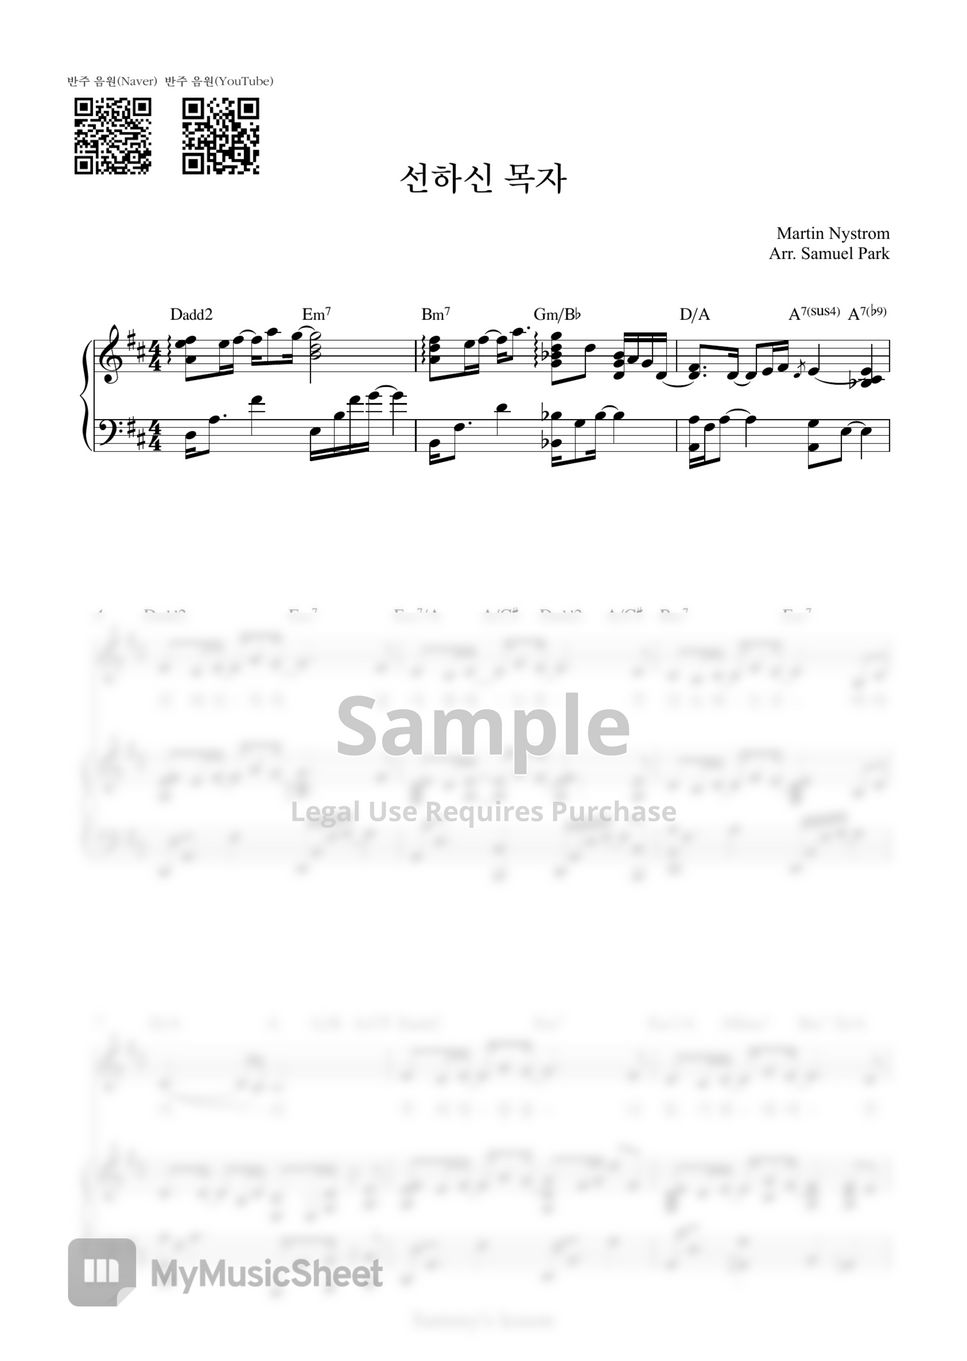 Martin J. Nystrom - 선하신 목자 (Shepherd of my soul) (Piano Cover) by Samuel Park